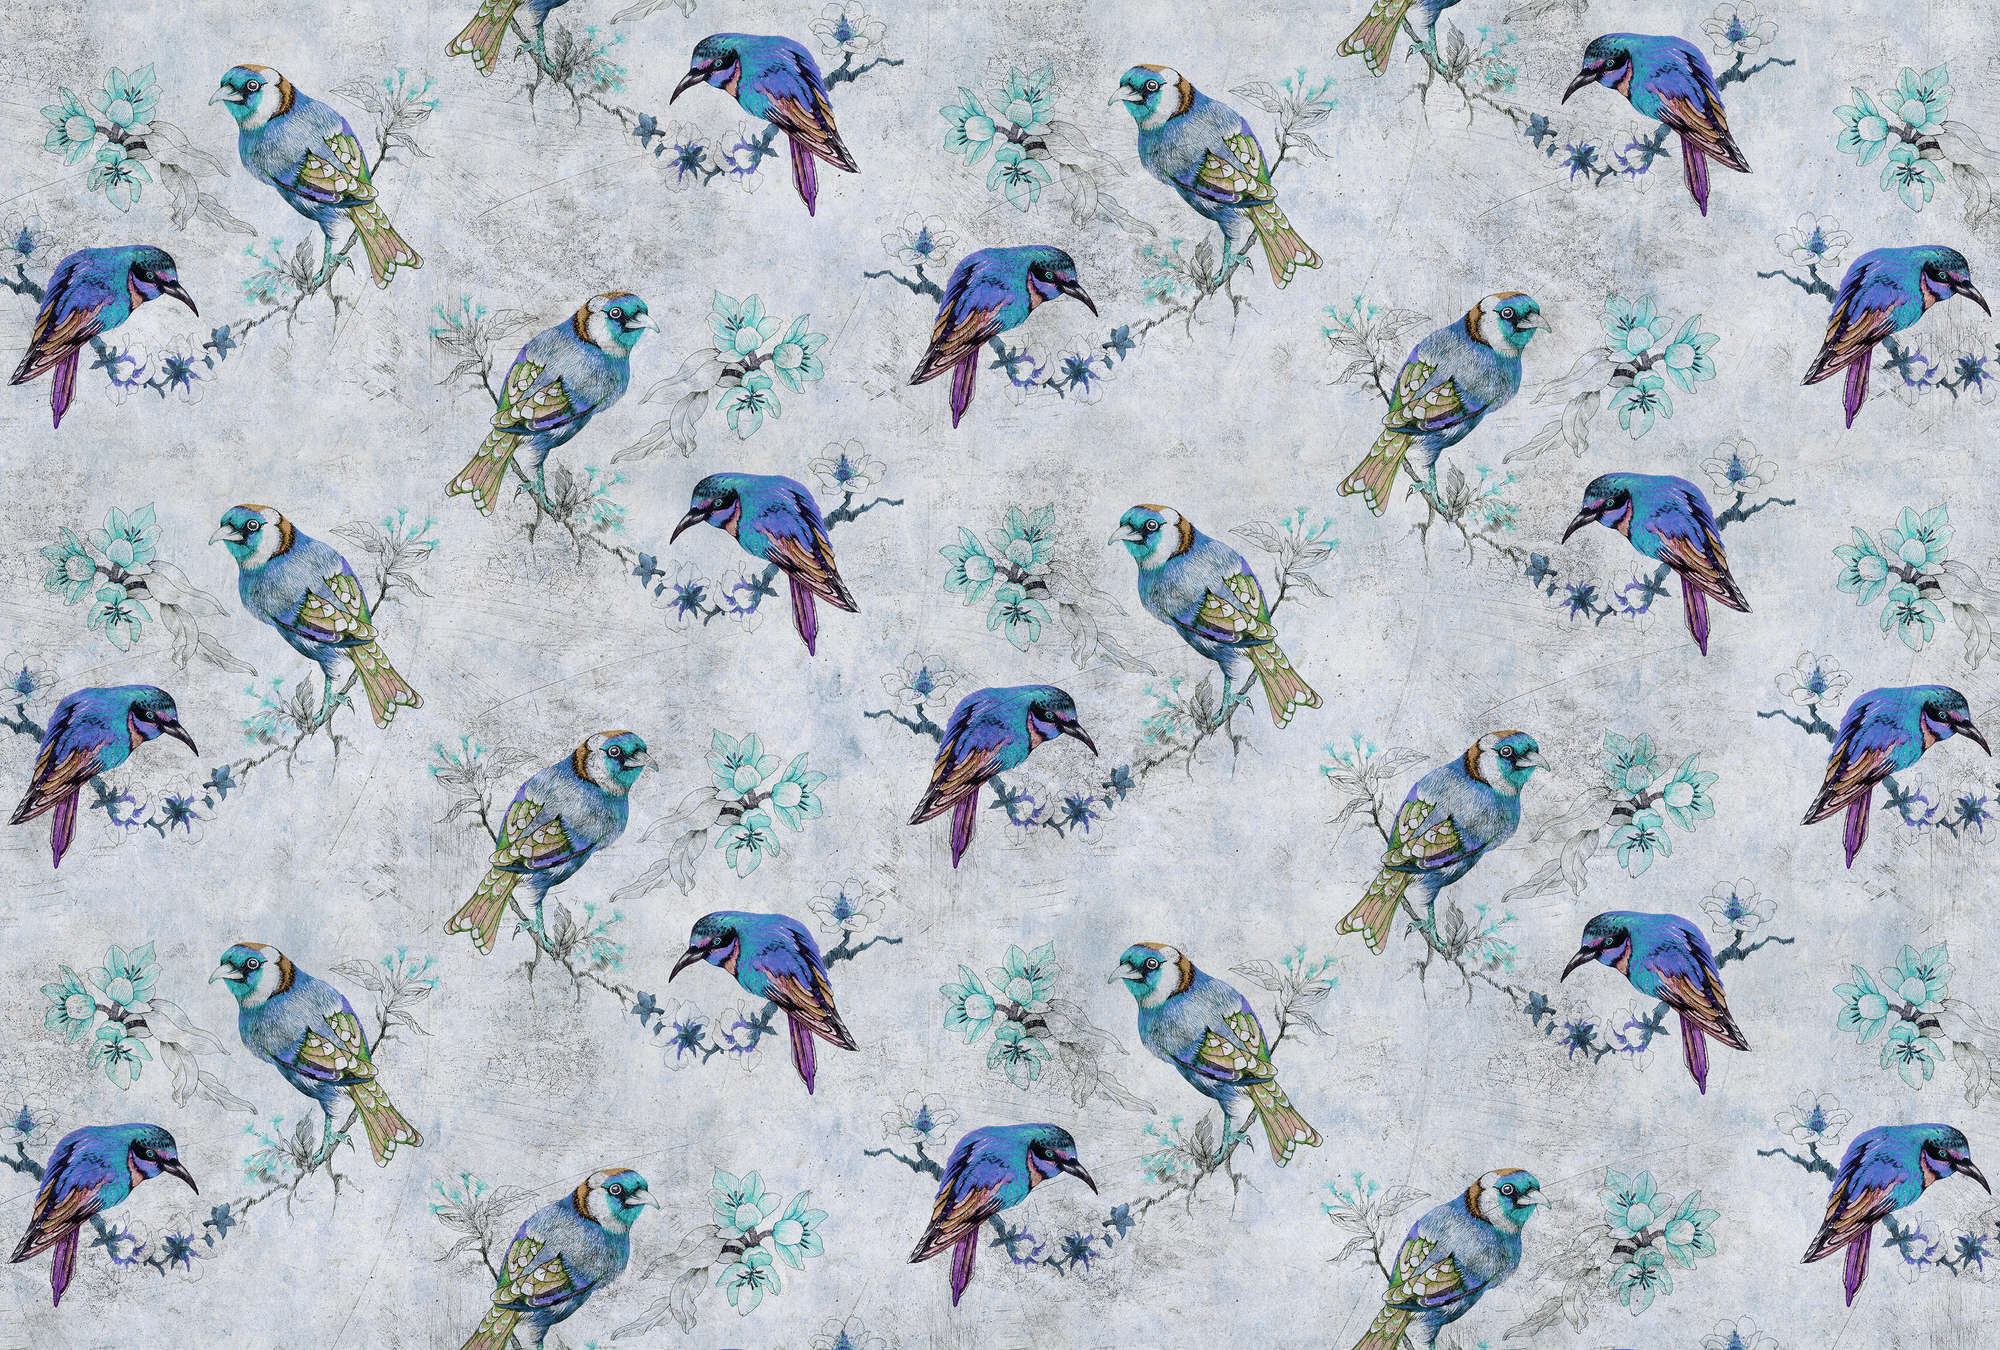             Love birds 1 - Photo wallpaper bird pattern in drawing style in scratchy texture - Blue, Grey | Matt smooth fleece
        